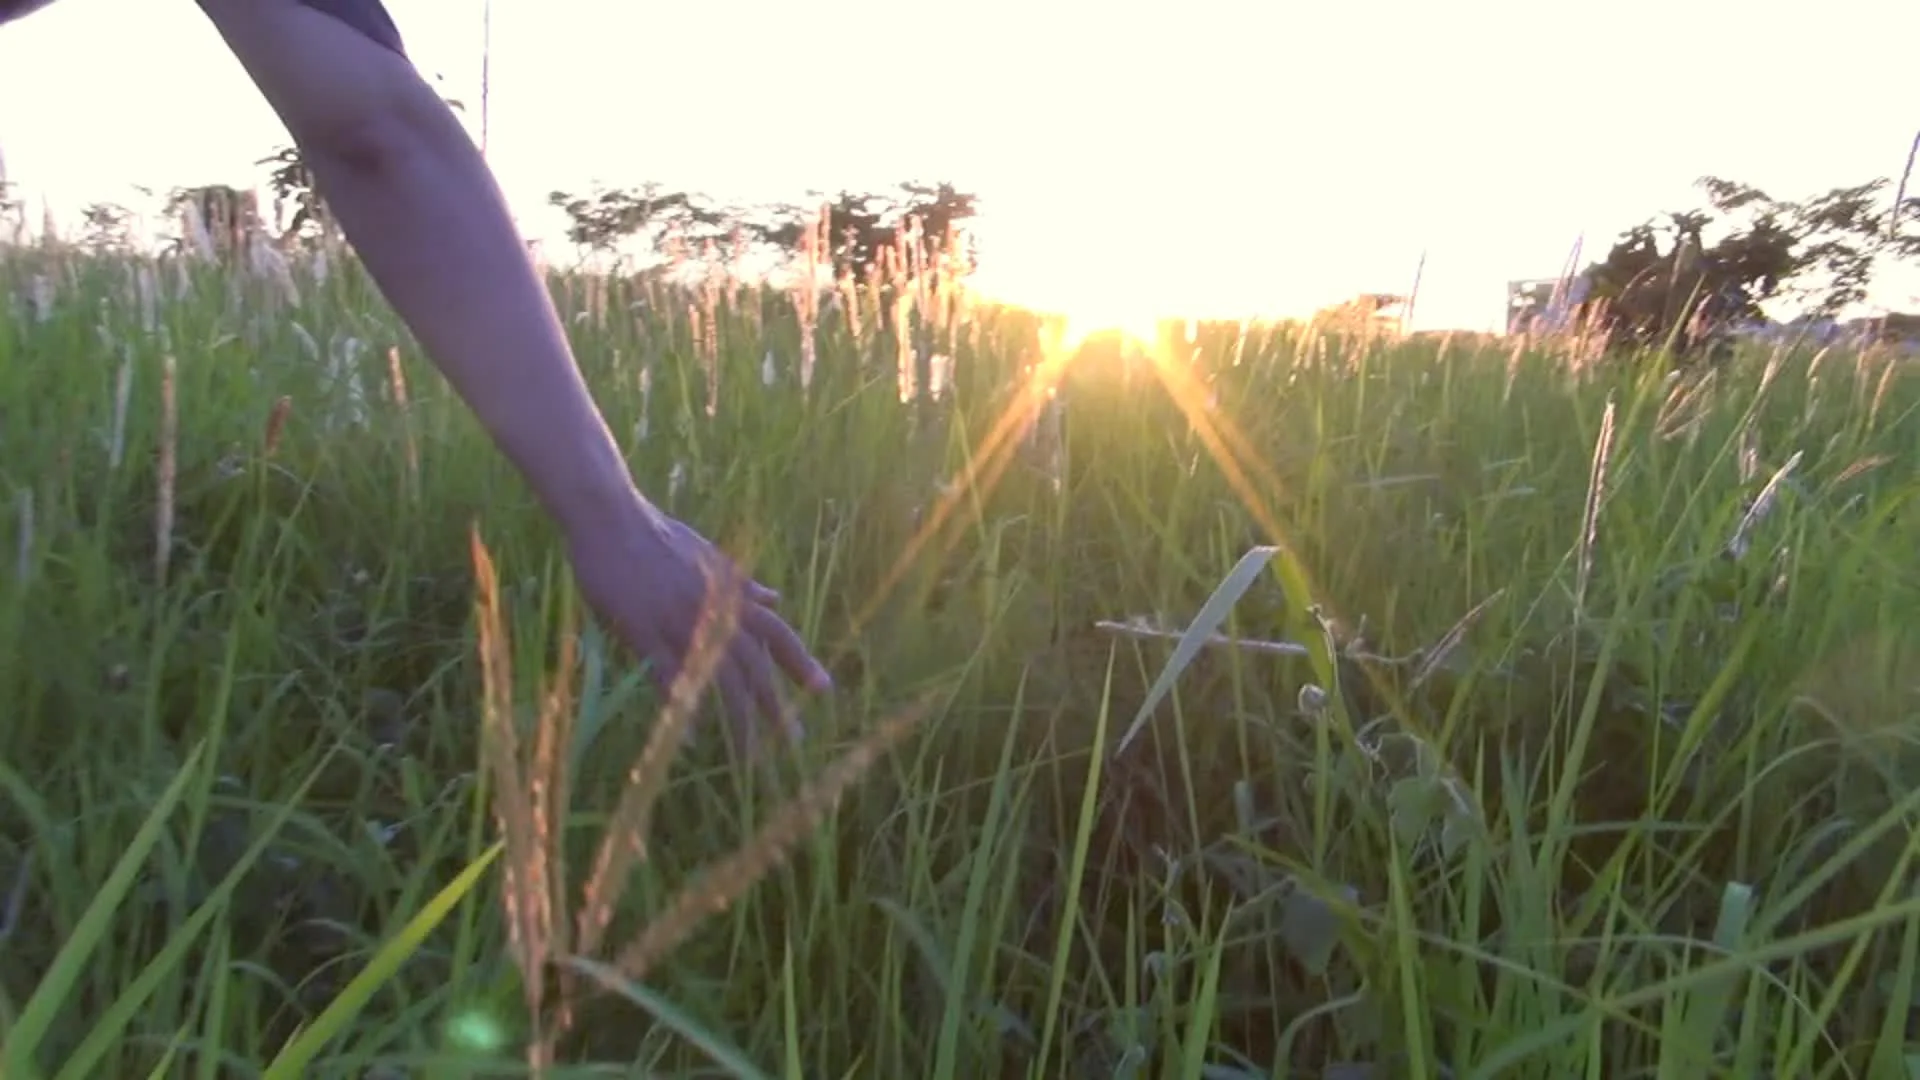 Man's hand touching grass walking through the field Stock Footage,#touching# grass#Man#hand